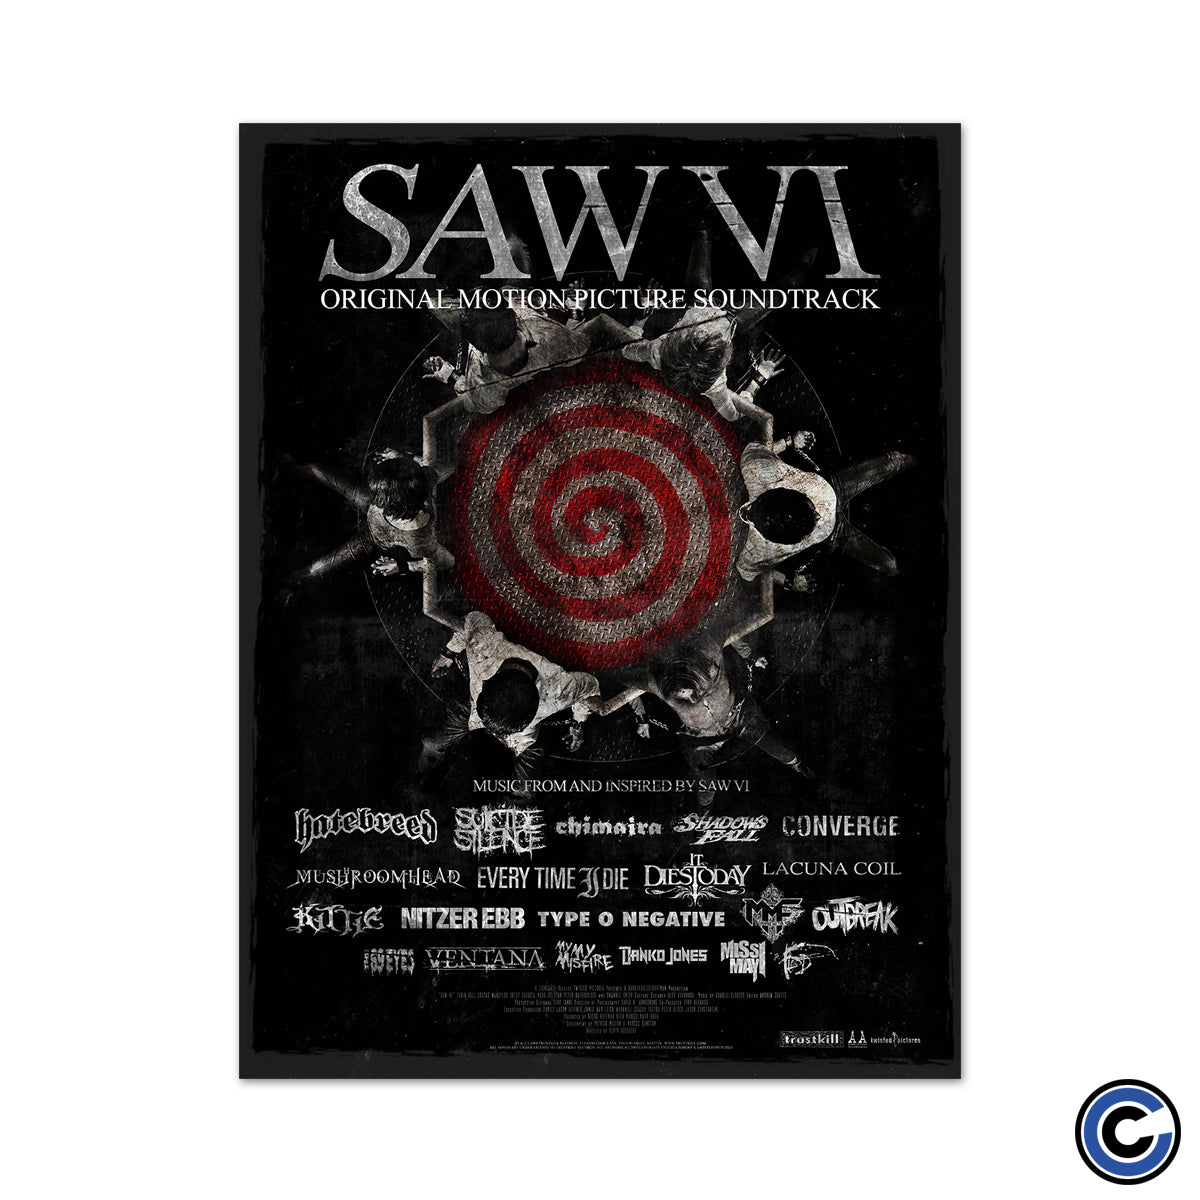 Trustkill Records "Saw VI Soundtrack" Poster